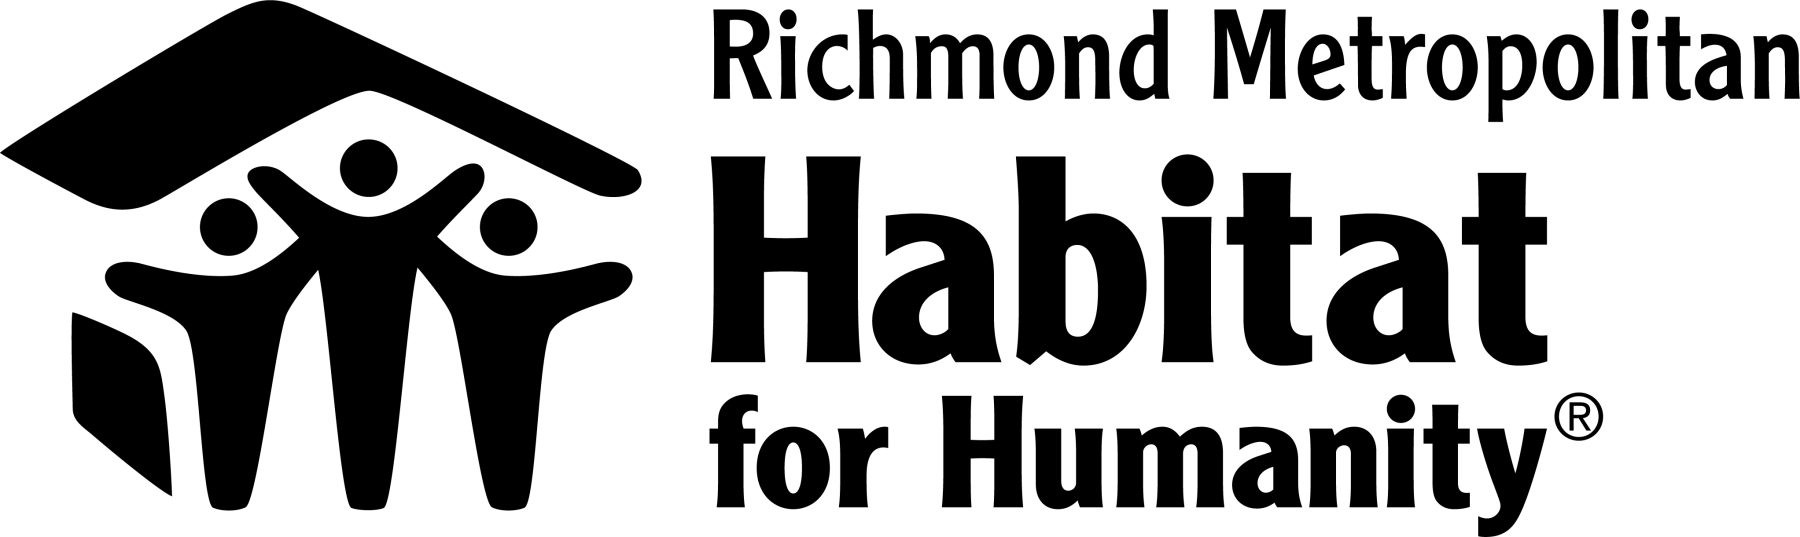 Richmond Metro Habitat for Humanity logo